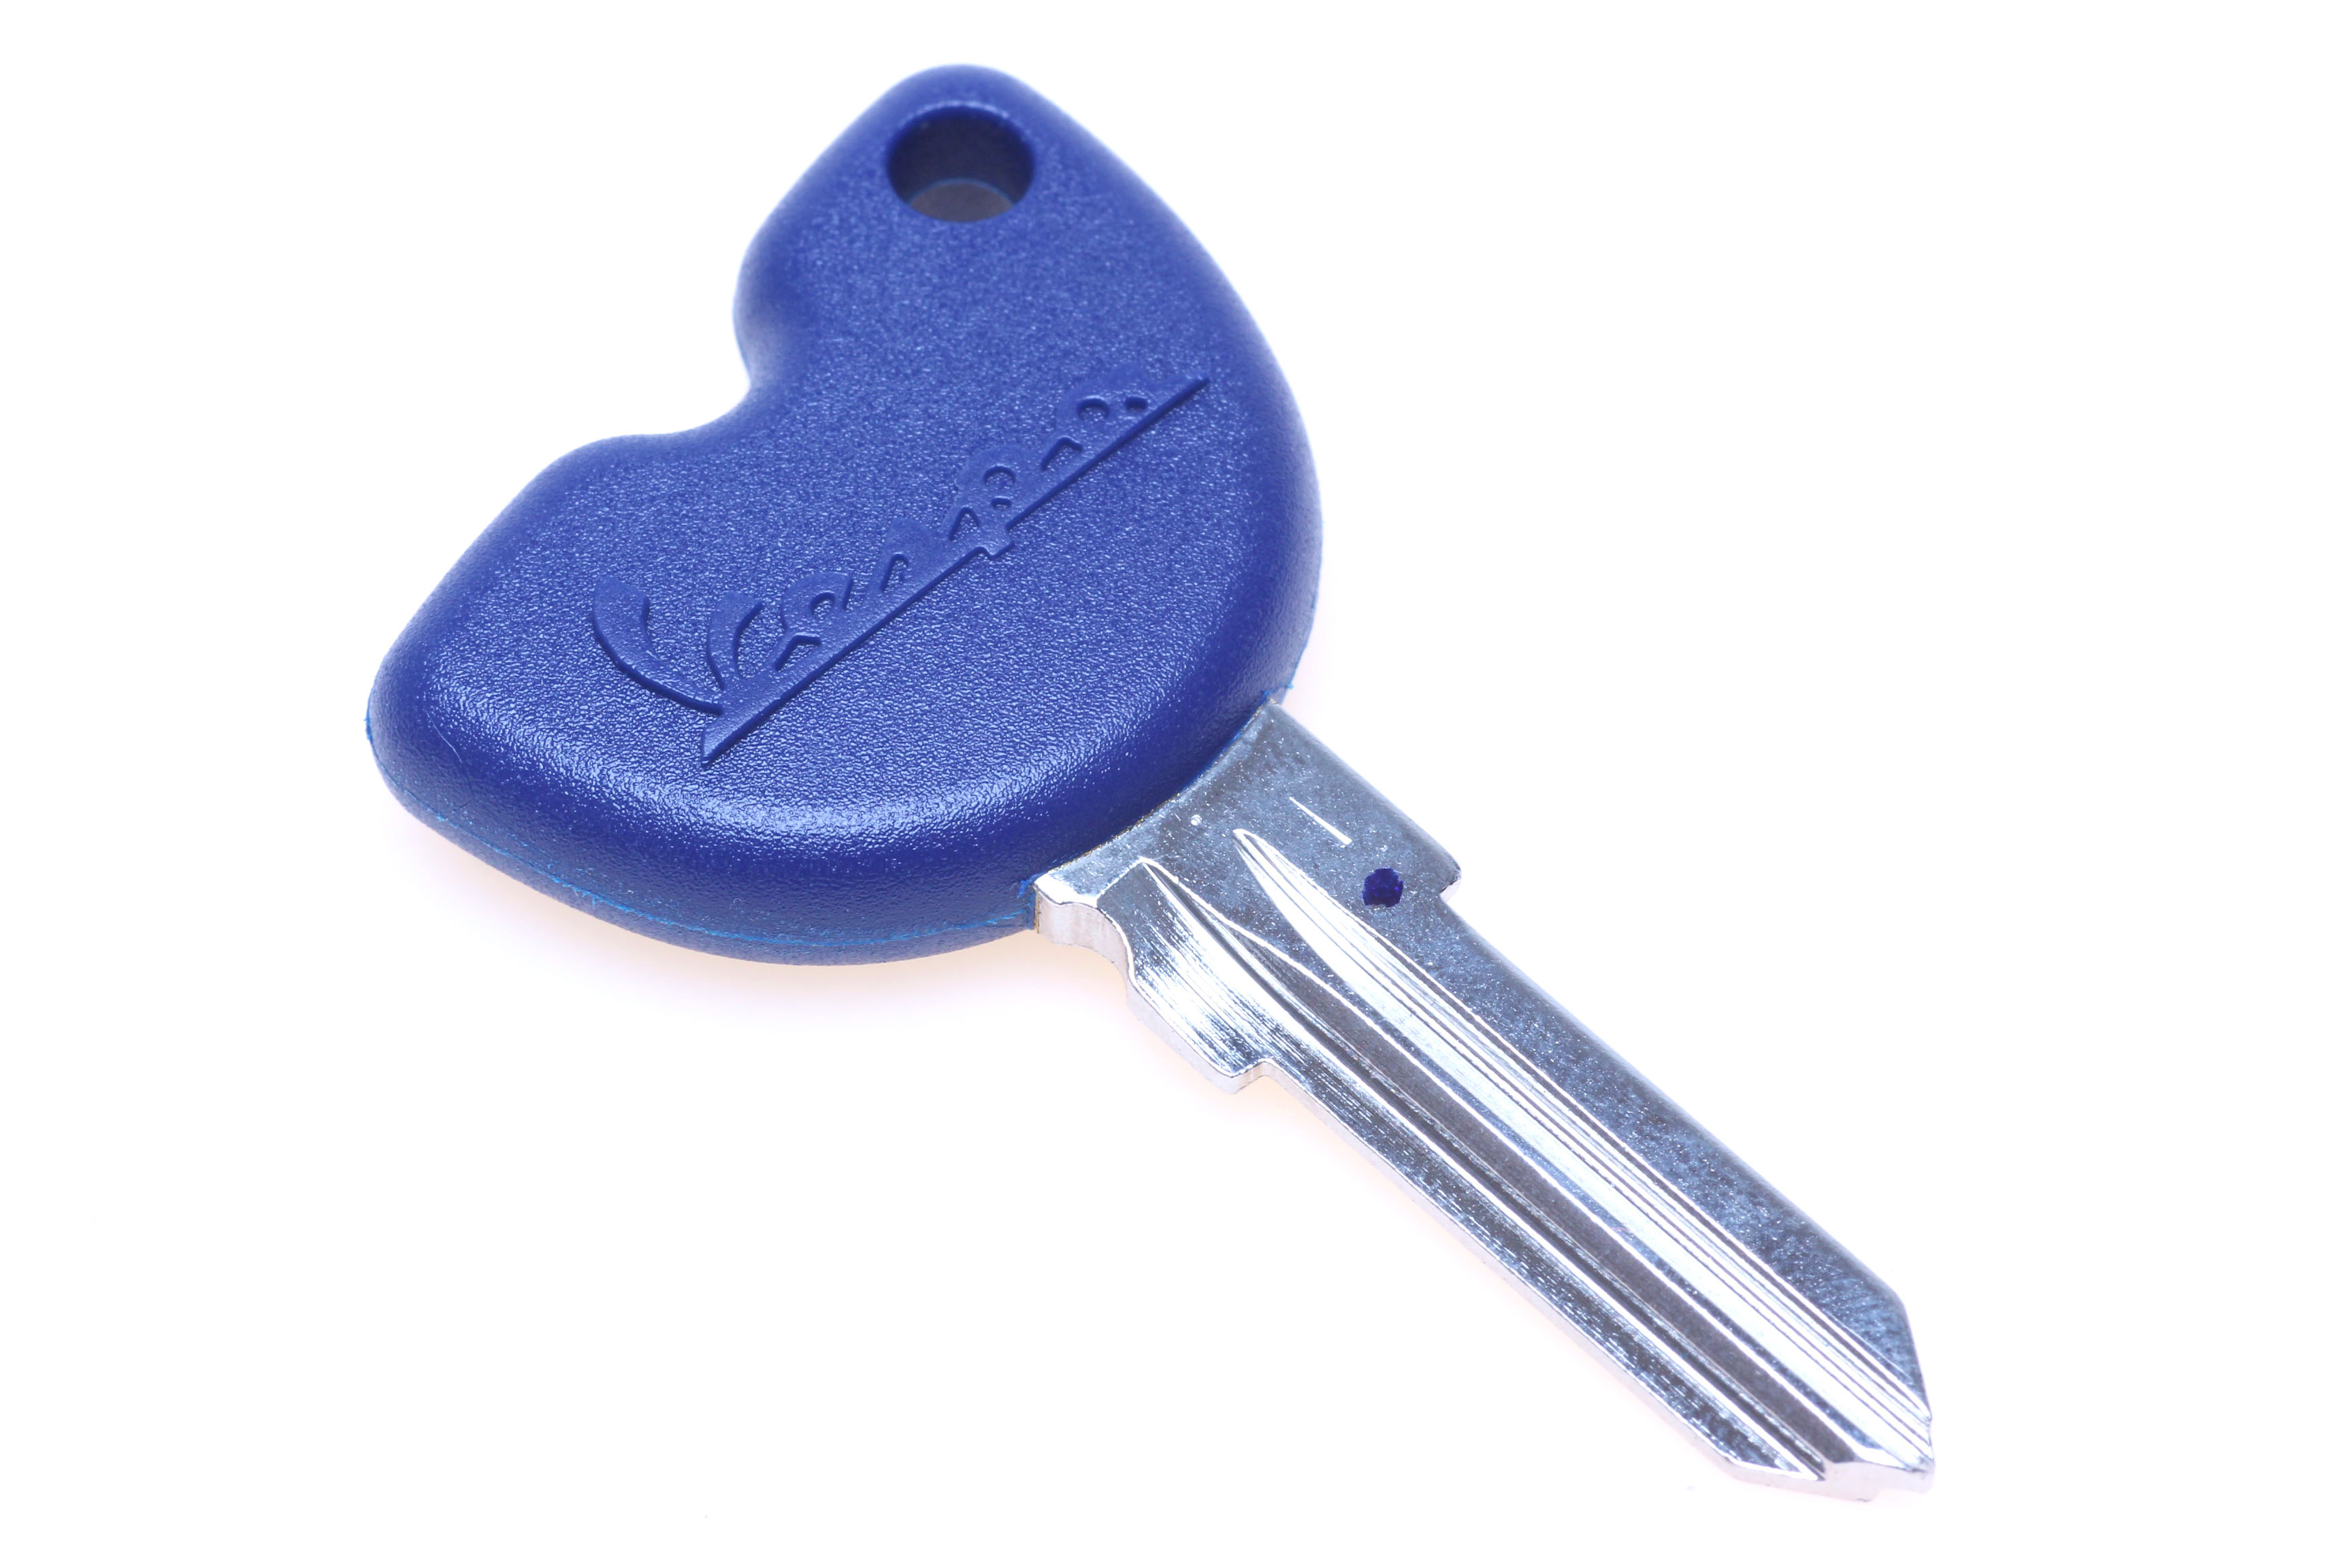 Schlüsselrohling Vespa/Piaggio, dunkelblau, mit Wegfahrsperre